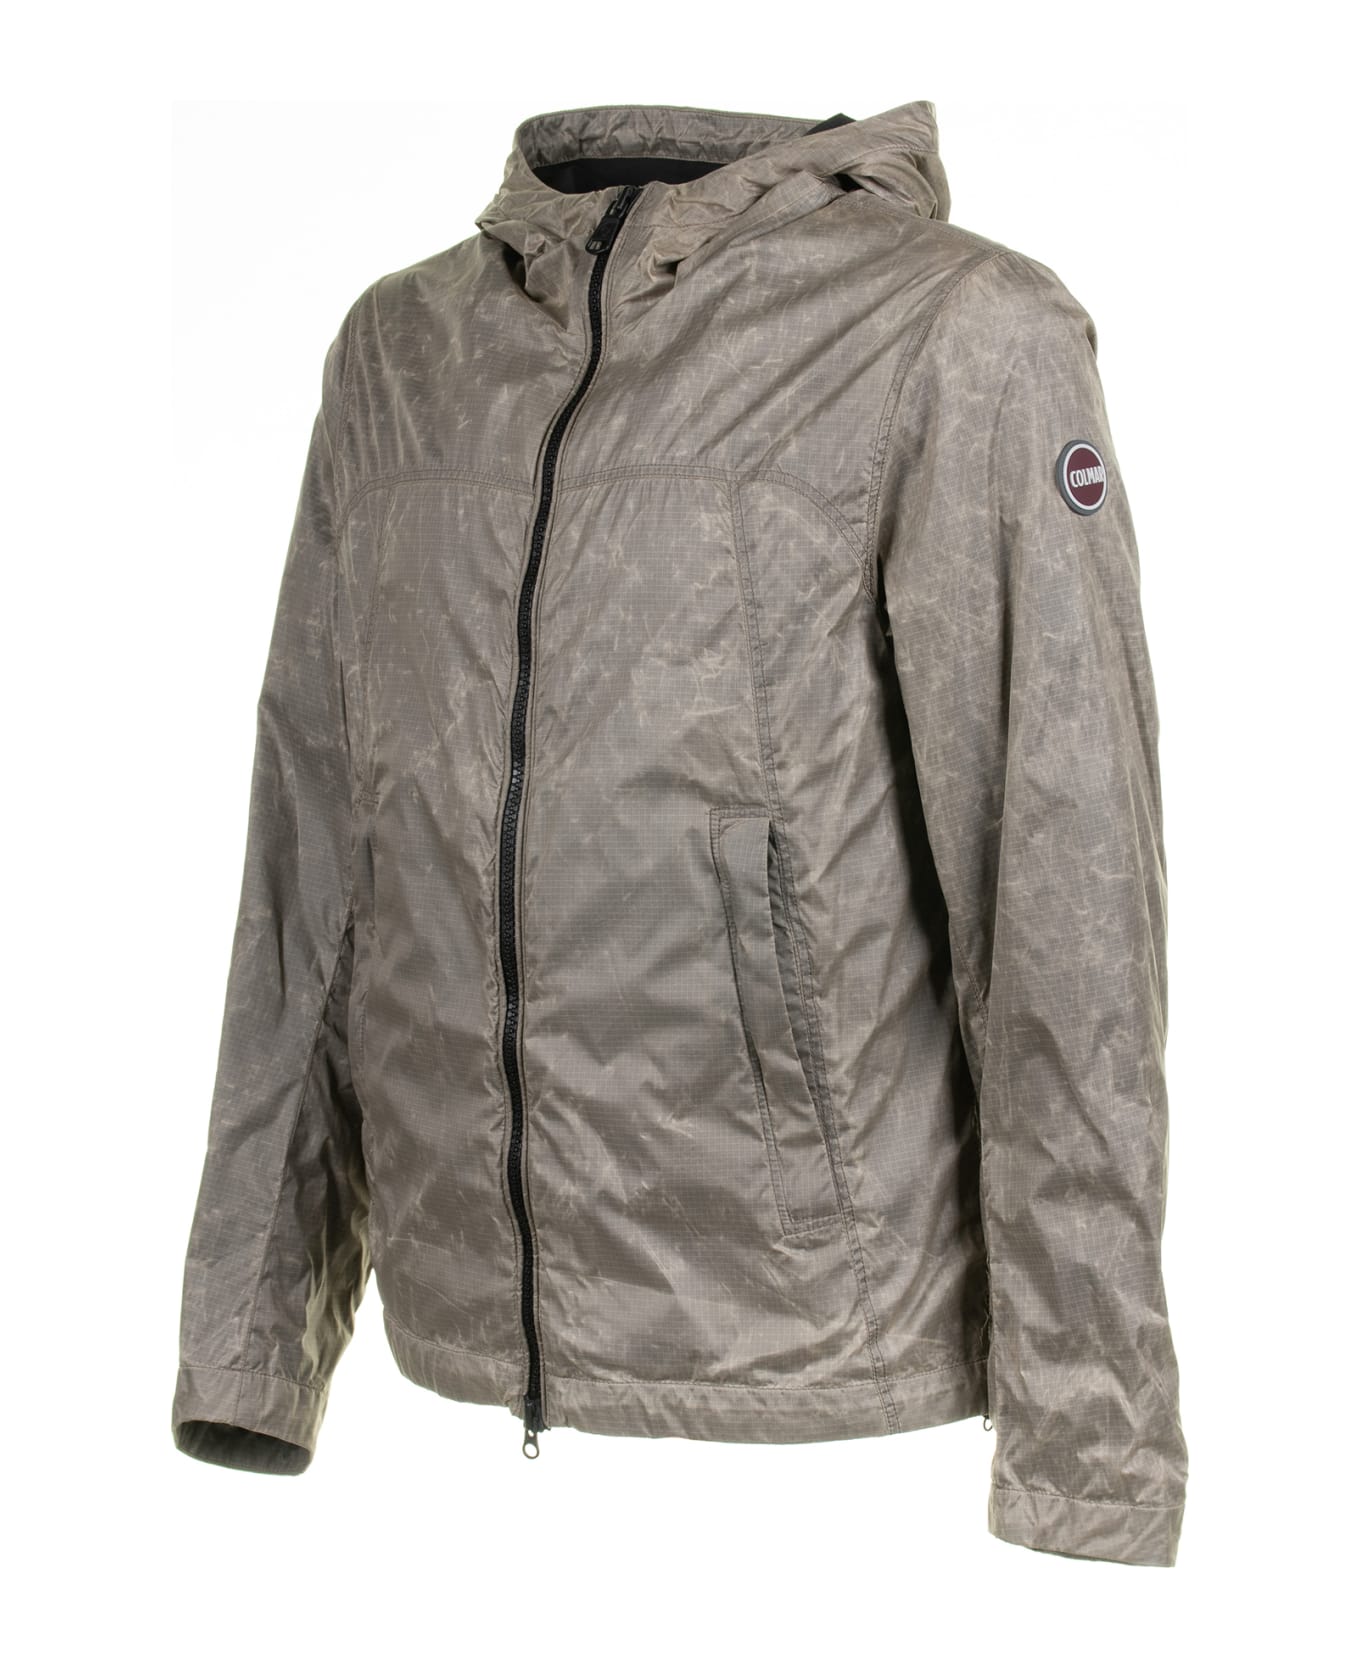 Colmar Jacket With Hood In Waxed Fabric - BEIGE ジャケット